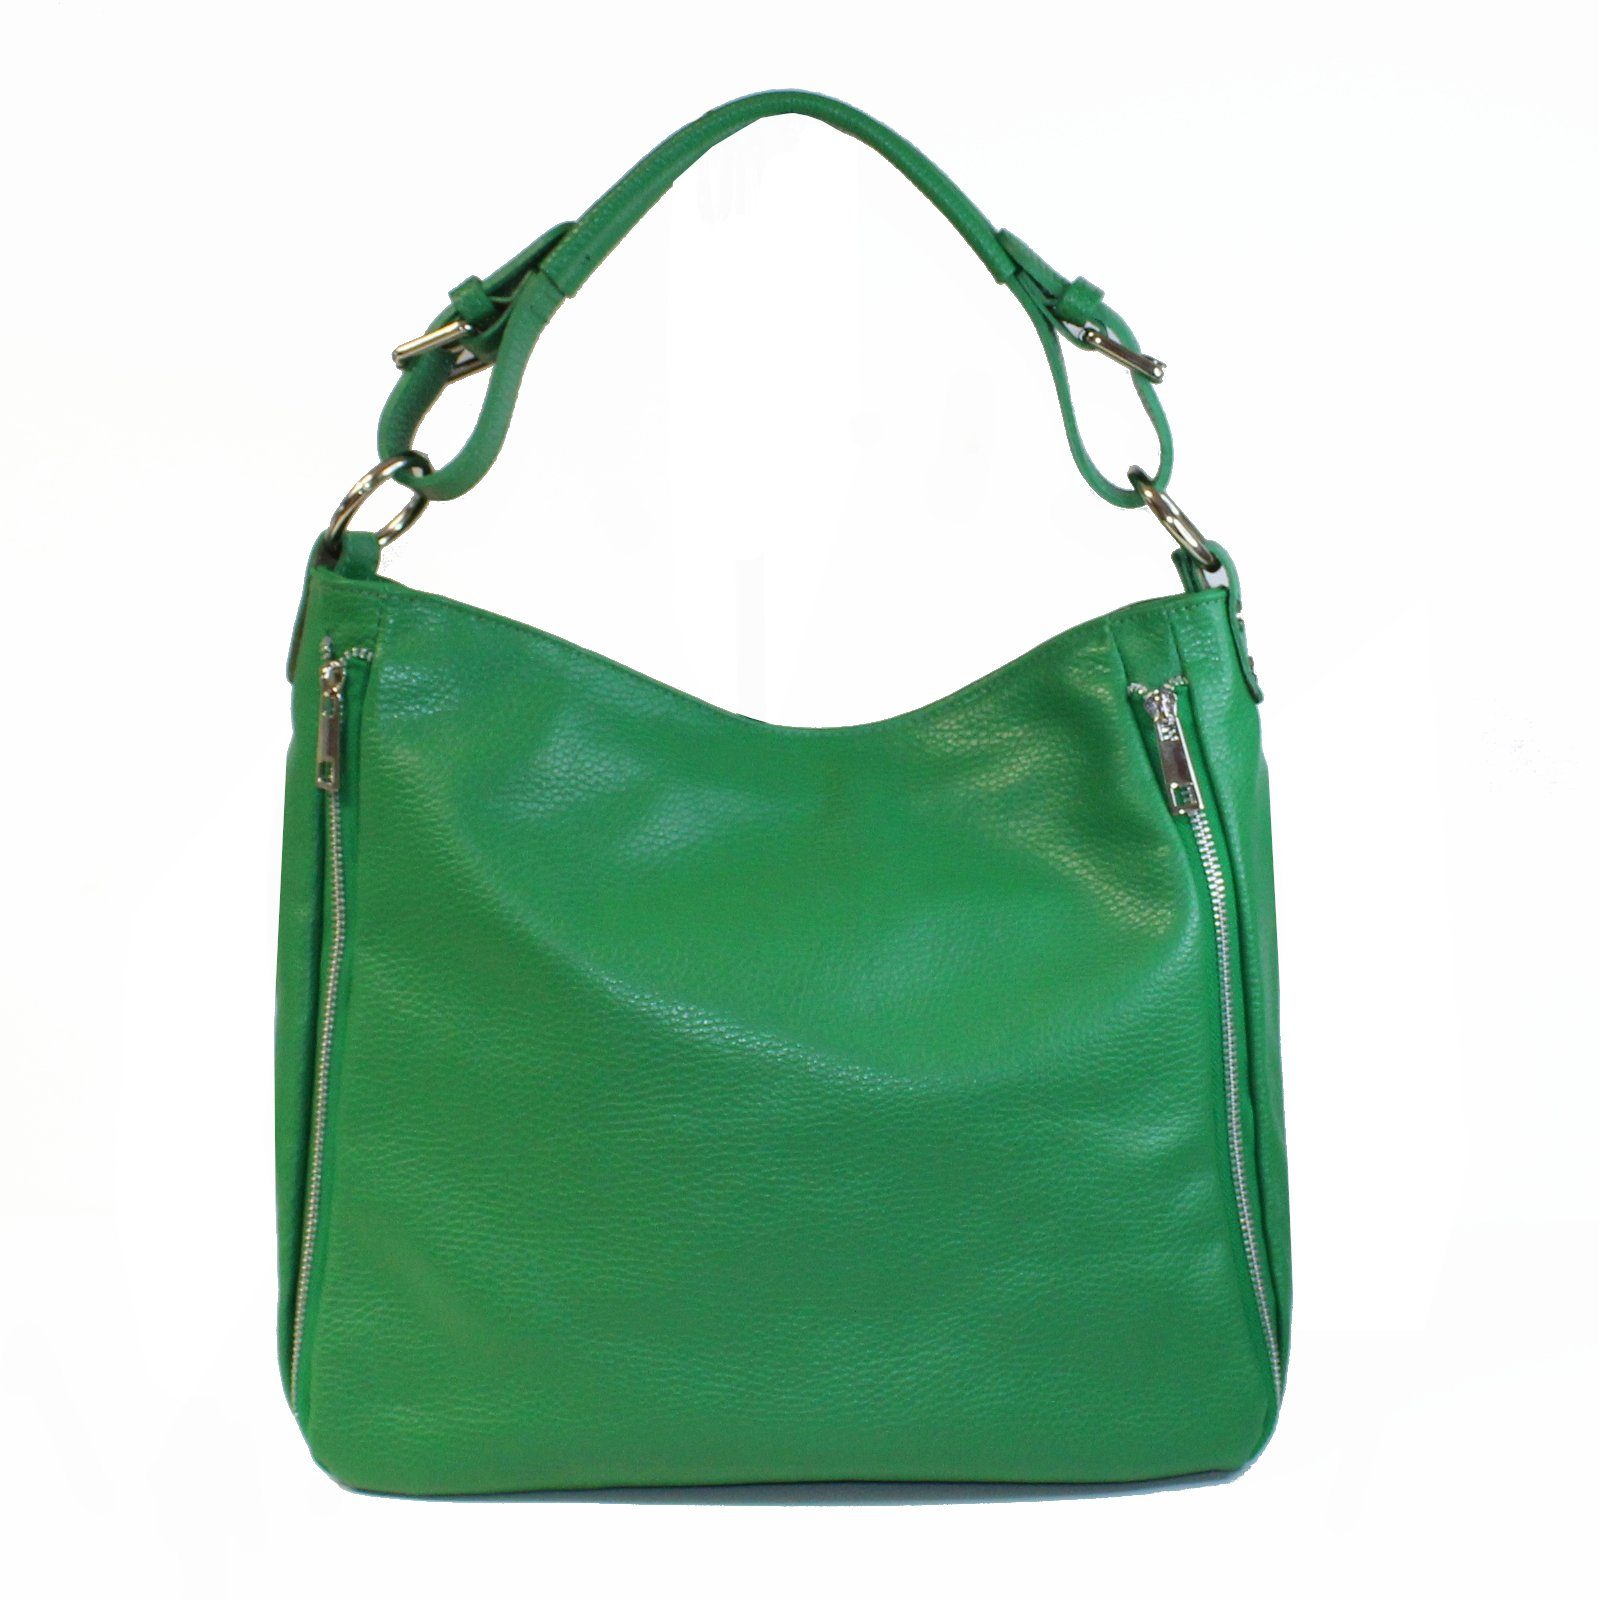 Made Grün fs-bags Italy fs7142, Handtasche in